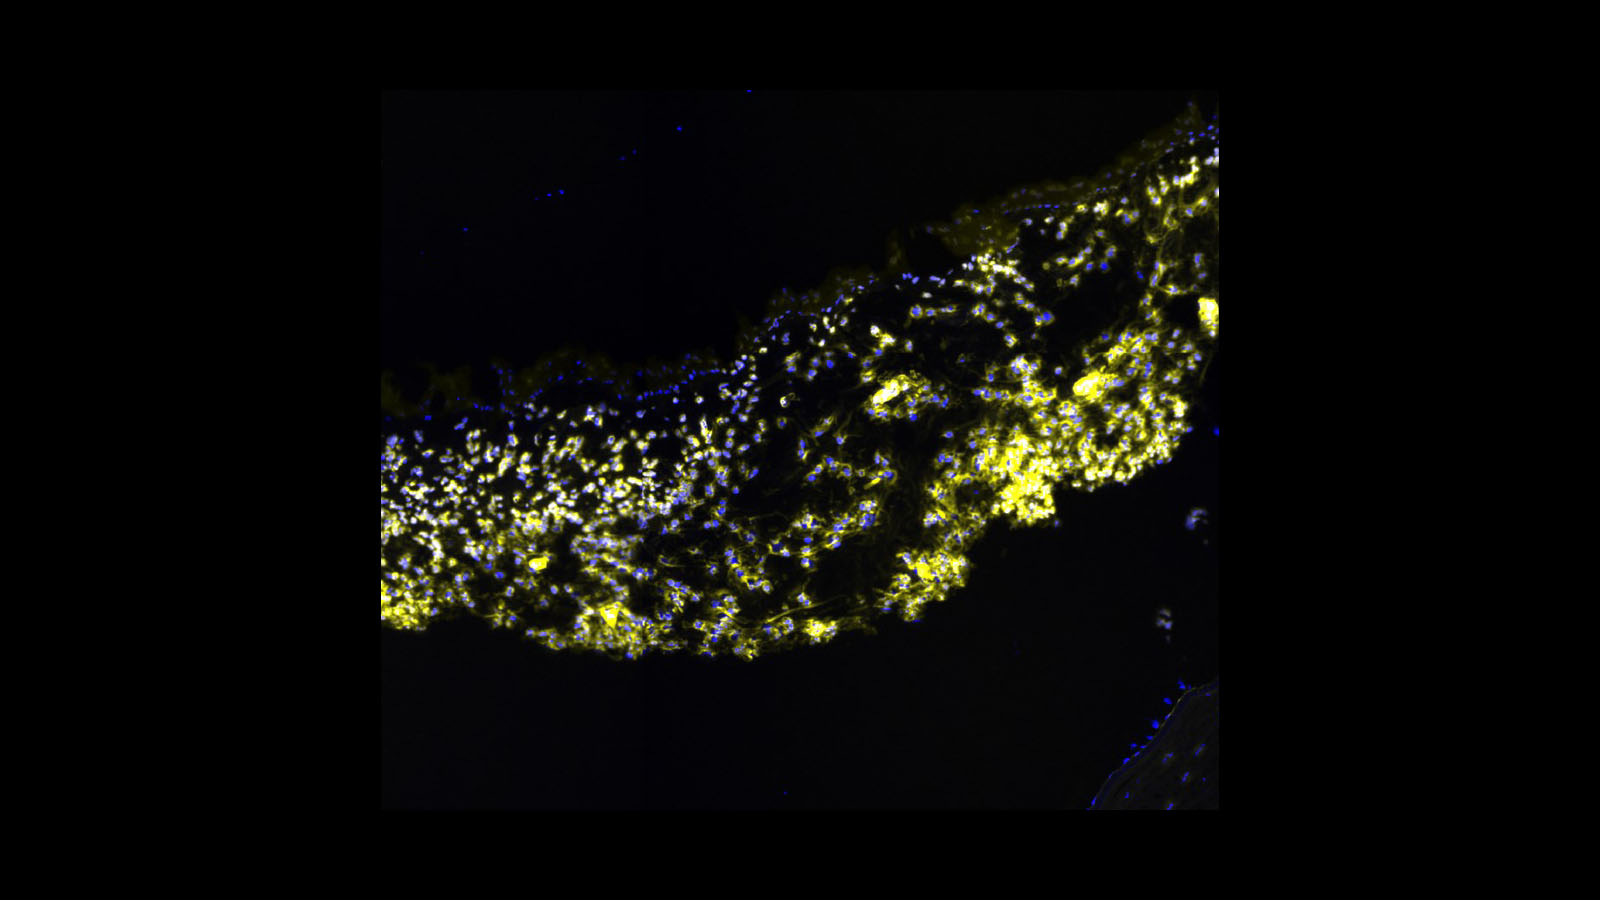 Fluorescent microscopy image of the human iris, courtesy of Dr. Angela Kruse from Vanderbilt